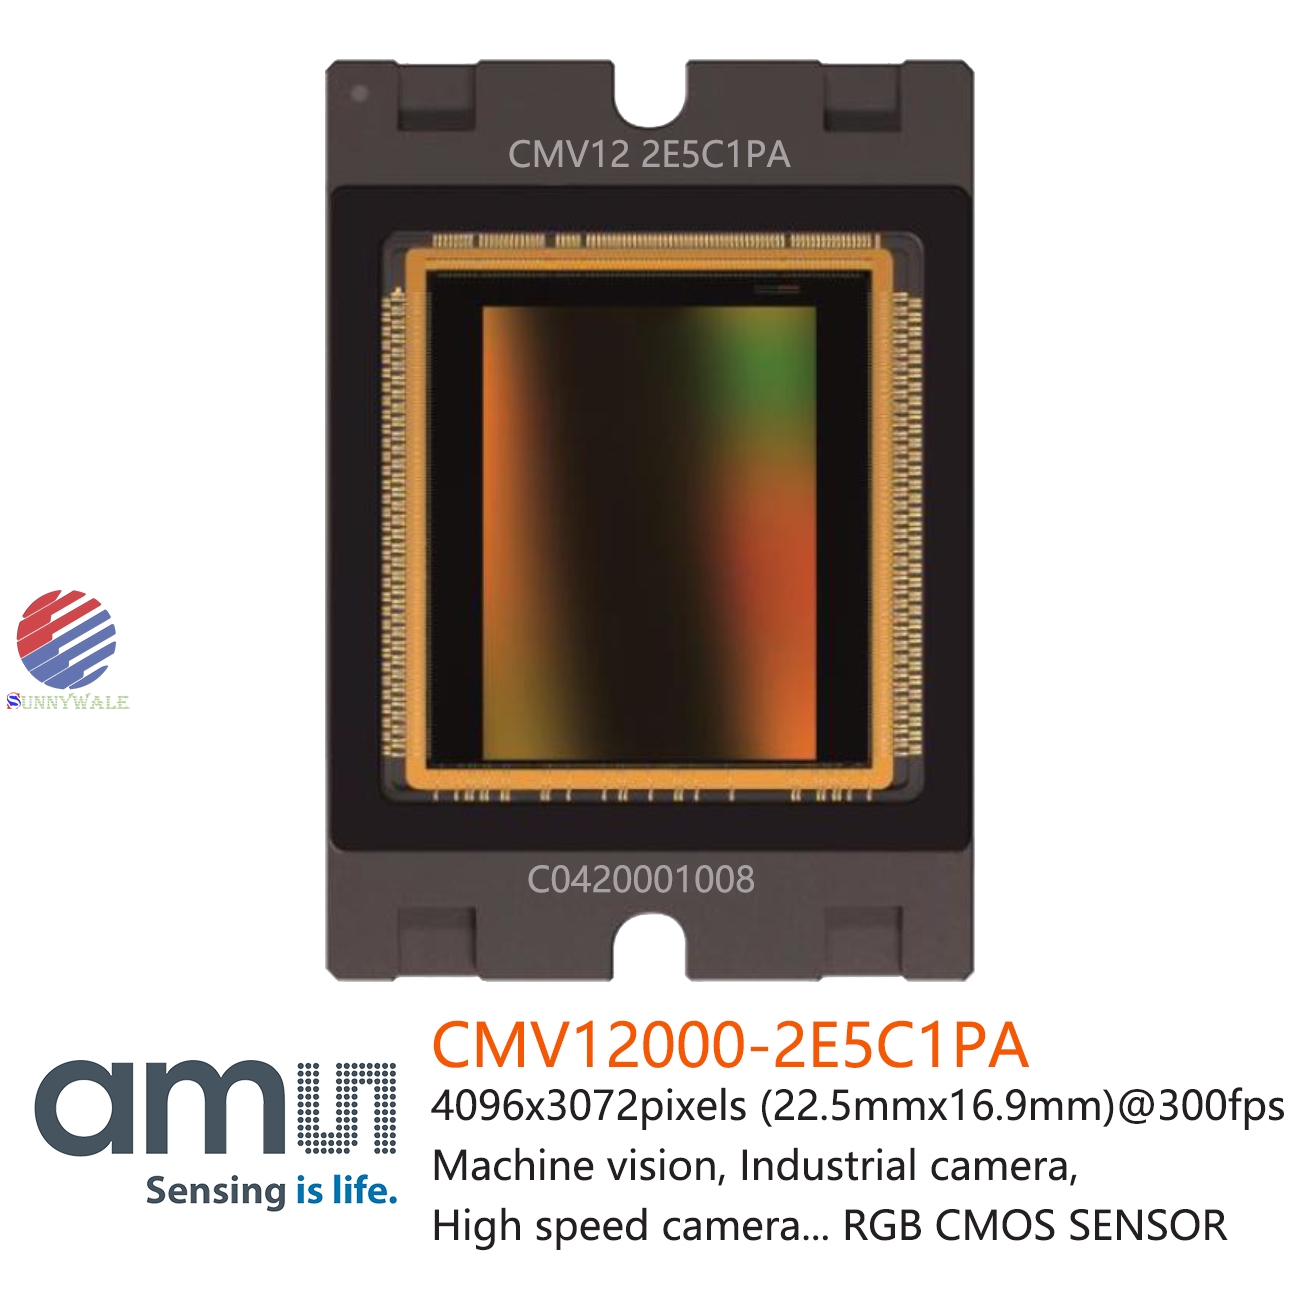 CMV12000-2E5C1PA, ES12-2E5C1PA,Austrial AMS OSRAM 12MP chips, High Speed Industrial camera sensor, Machine Vision ,Global Shutter, CMOS Image Sensor